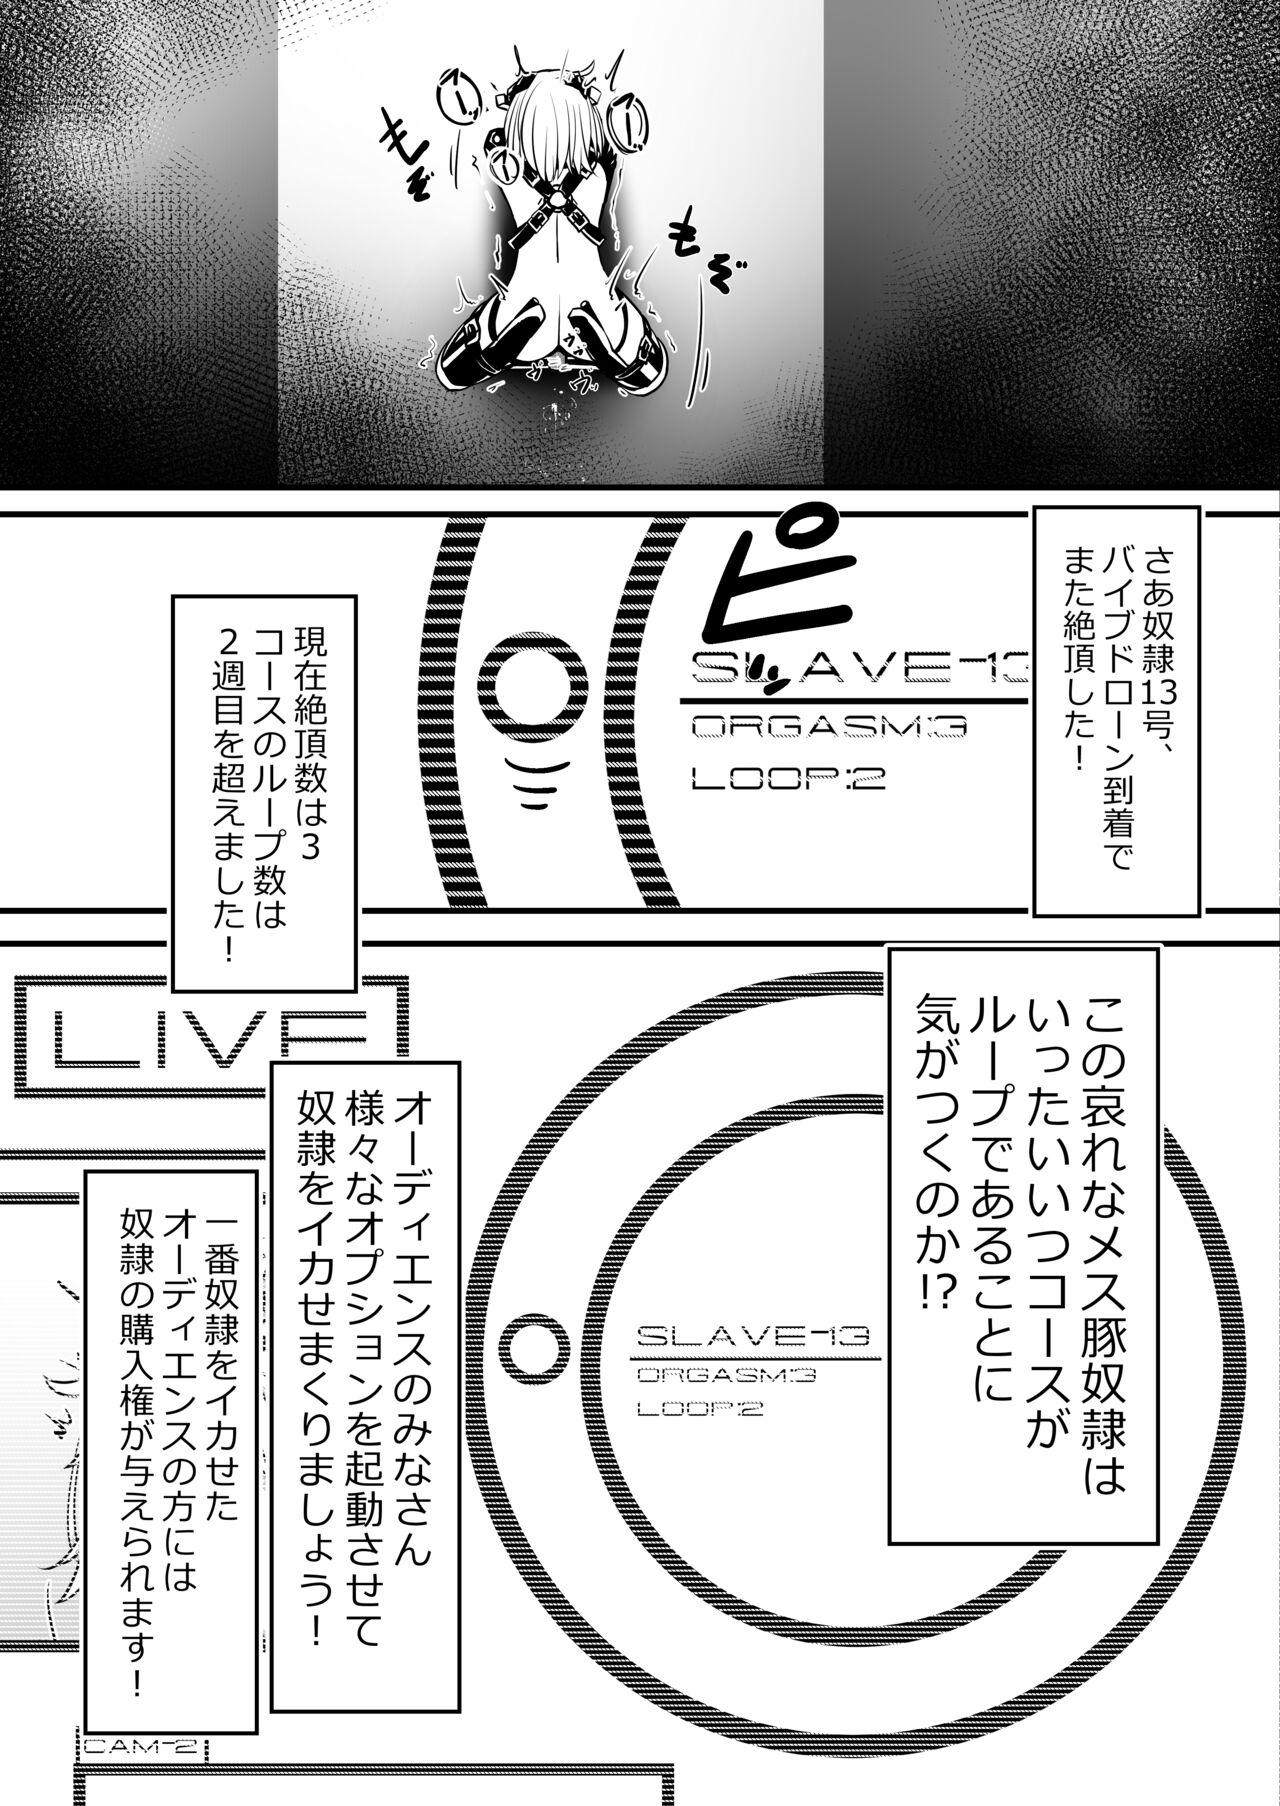 Rough Fucking ヒトイヌ馬之助ちゃん脱出漫画 - Original Uniform - Page 5